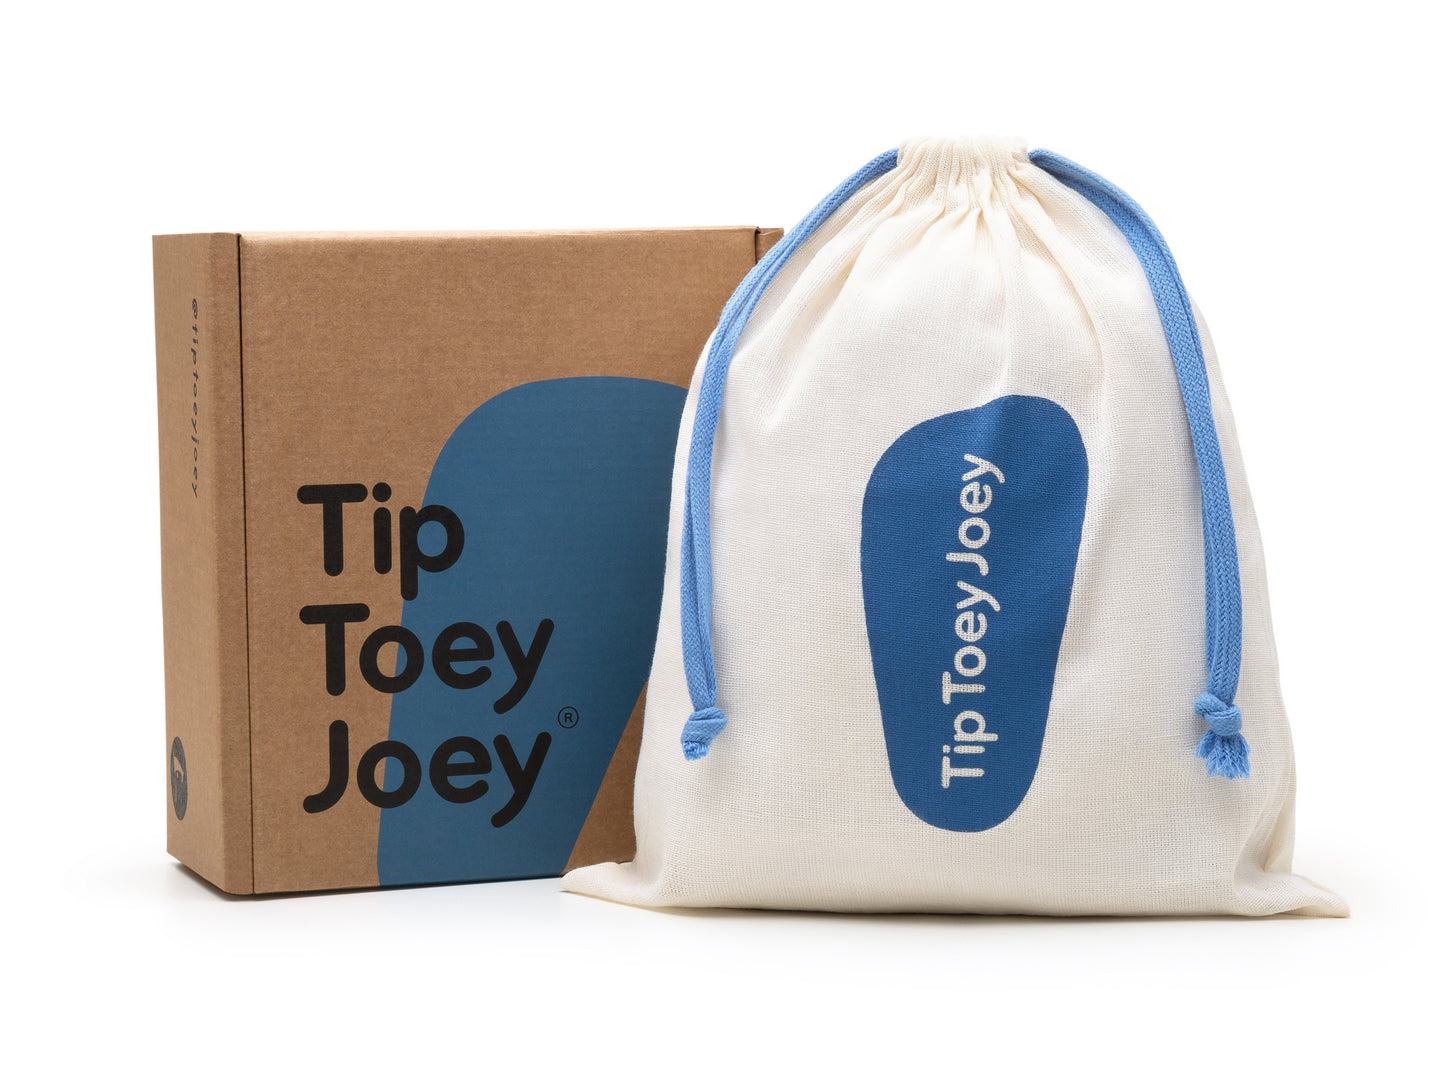 Tip Toey Joey - Step Tangerina (Run &Play)